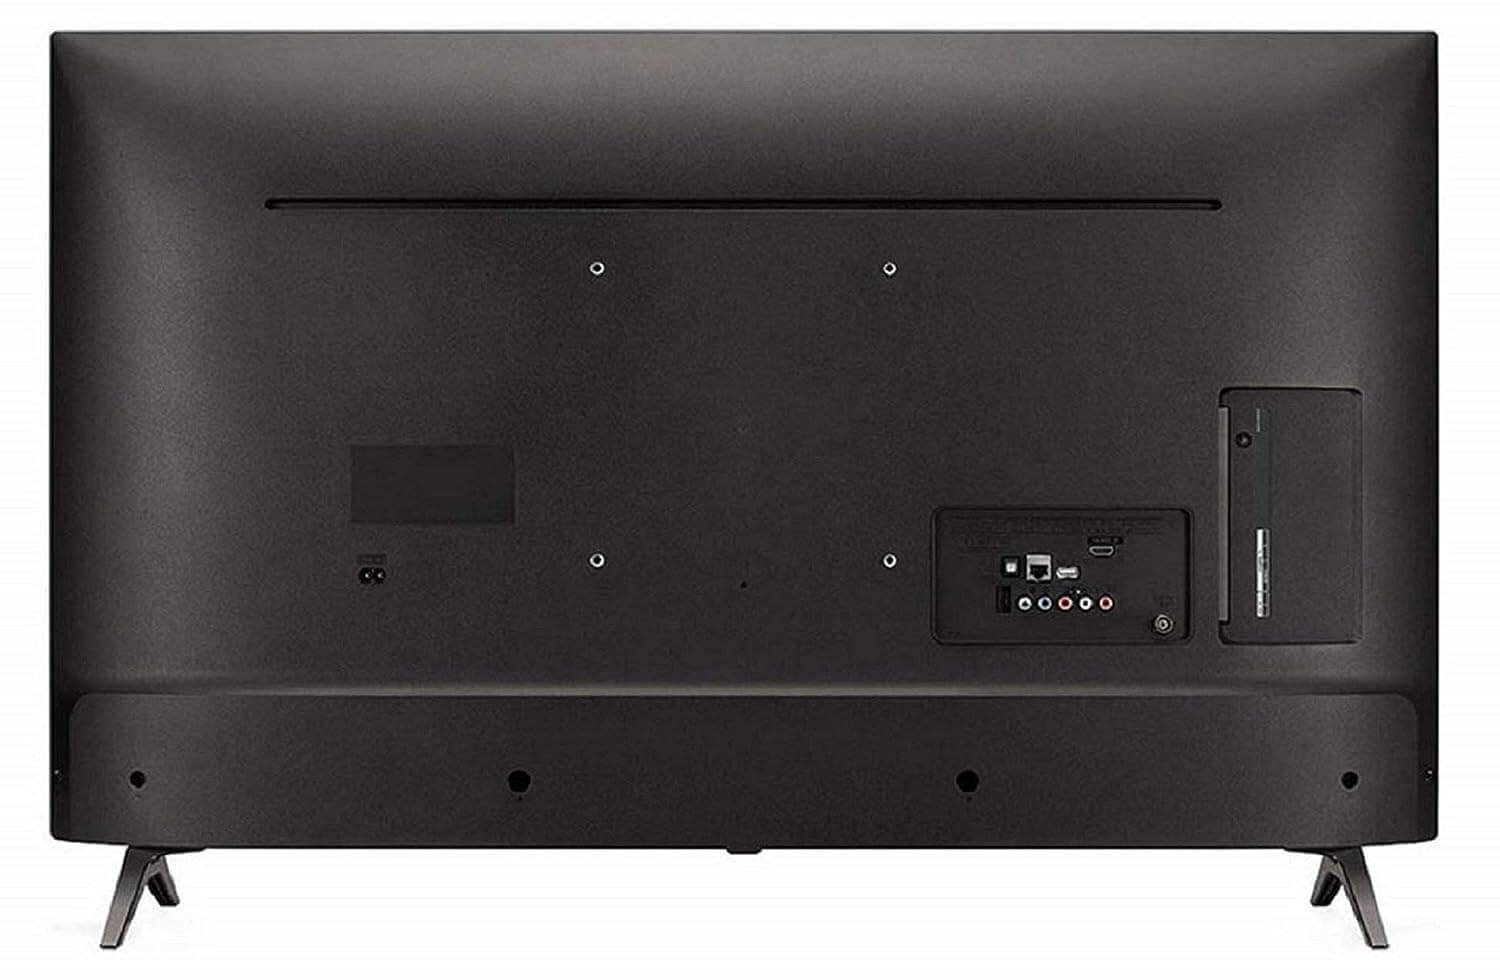 LG 49 Inch 4K UHD IPS LED TV Review